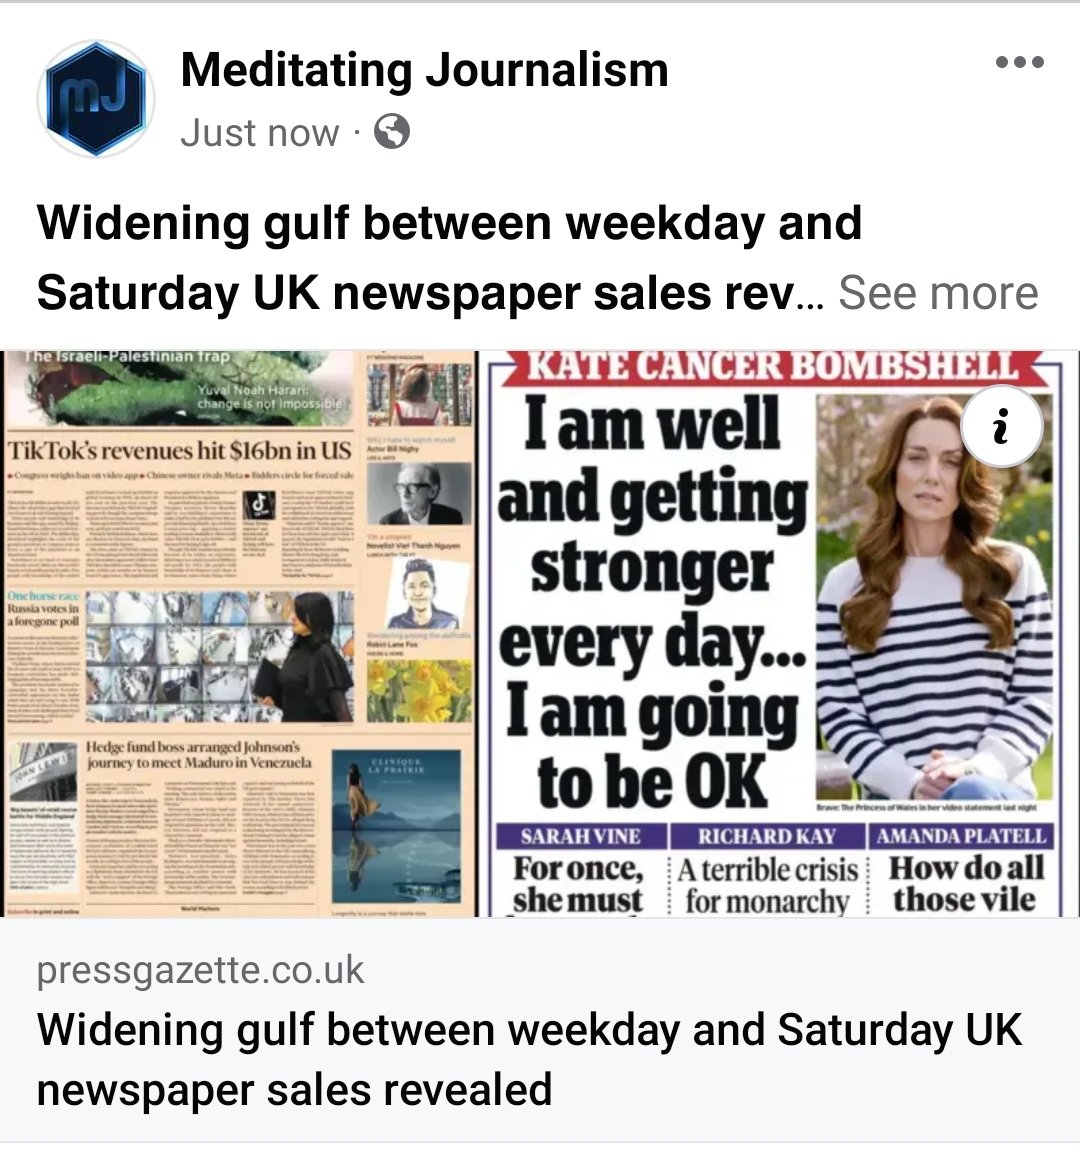 𝗪𝗶𝗱𝗲𝗻𝗶𝗻𝗴 𝗴𝘂𝗹𝗳 𝗯𝗲𝘁𝘄𝗲𝗲𝗻 𝘄𝗲𝗲𝗸𝗱𝗮𝘆 𝗮𝗻𝗱 𝗦𝗮𝘁𝘂𝗿𝗱𝗮𝘆 𝗨𝗞 𝗻𝗲𝘄𝘀𝗽𝗮𝗽𝗲𝗿 𝘀𝗮𝗹𝗲𝘀 𝗿𝗲𝘃𝗲𝗮𝗹𝗲𝗱

whatsapp.com/channel/0029Va…
#MeditatingJournalism #PressGazette #FutureofMedia #WeekendCirculation #WeekdayReadership #DailyMail #DailyMirror